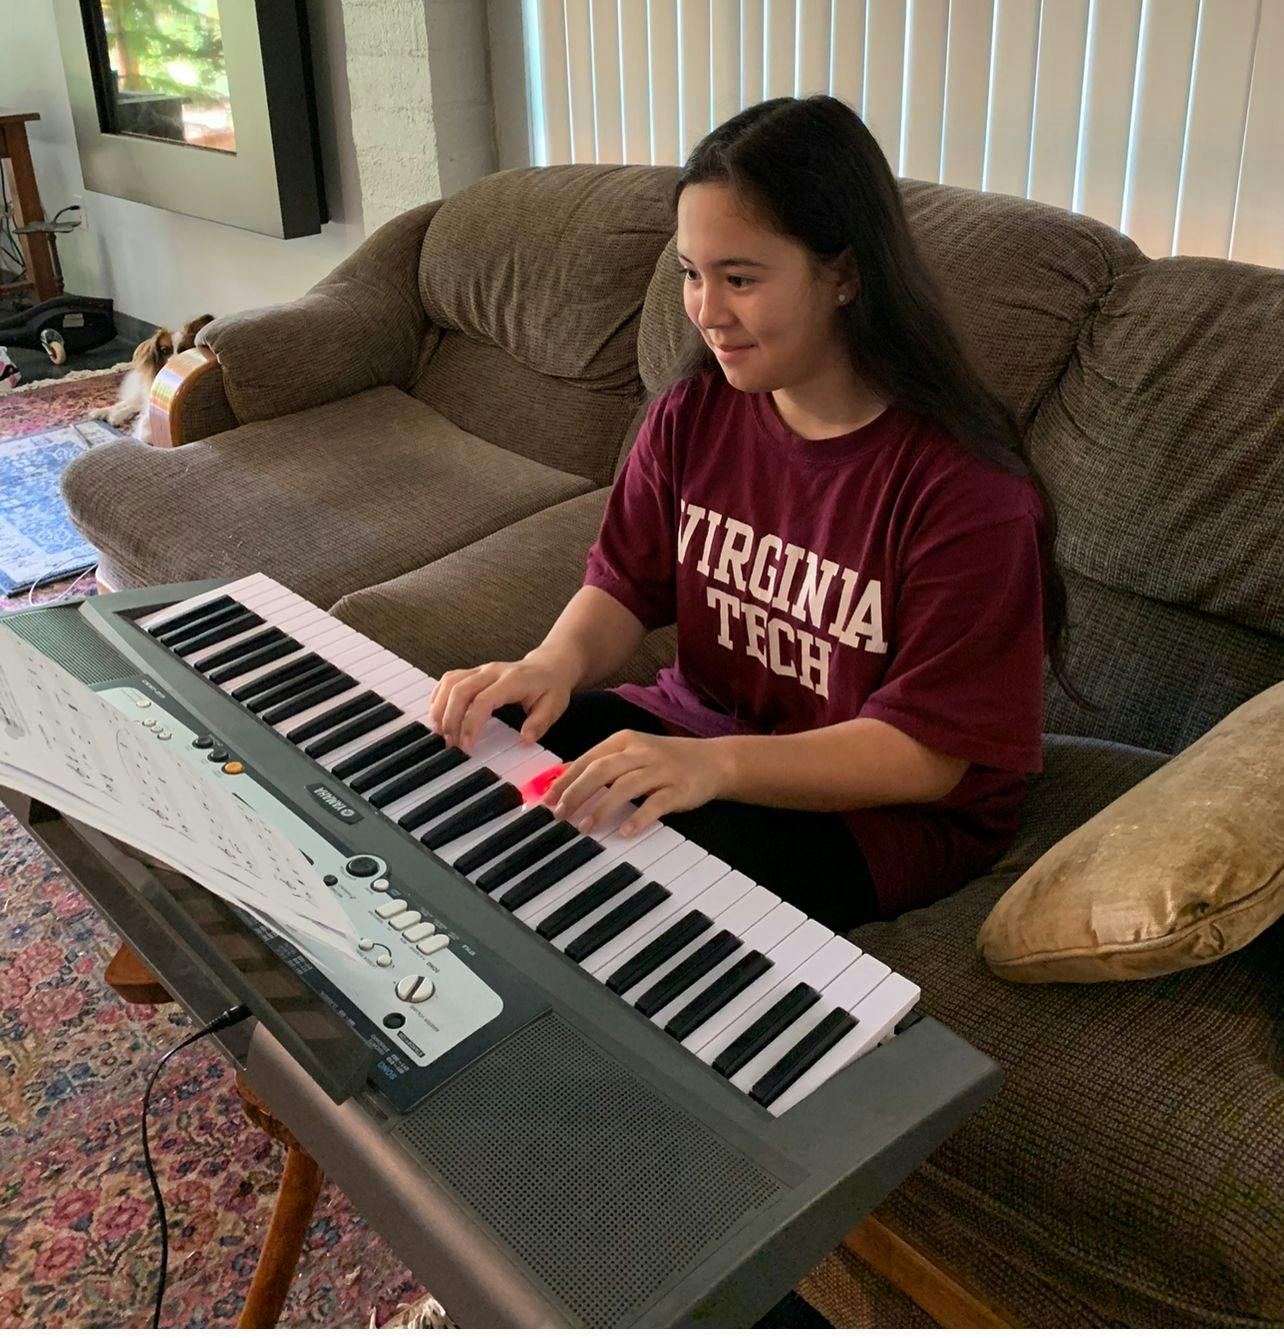 A COS teen girl practices the piano